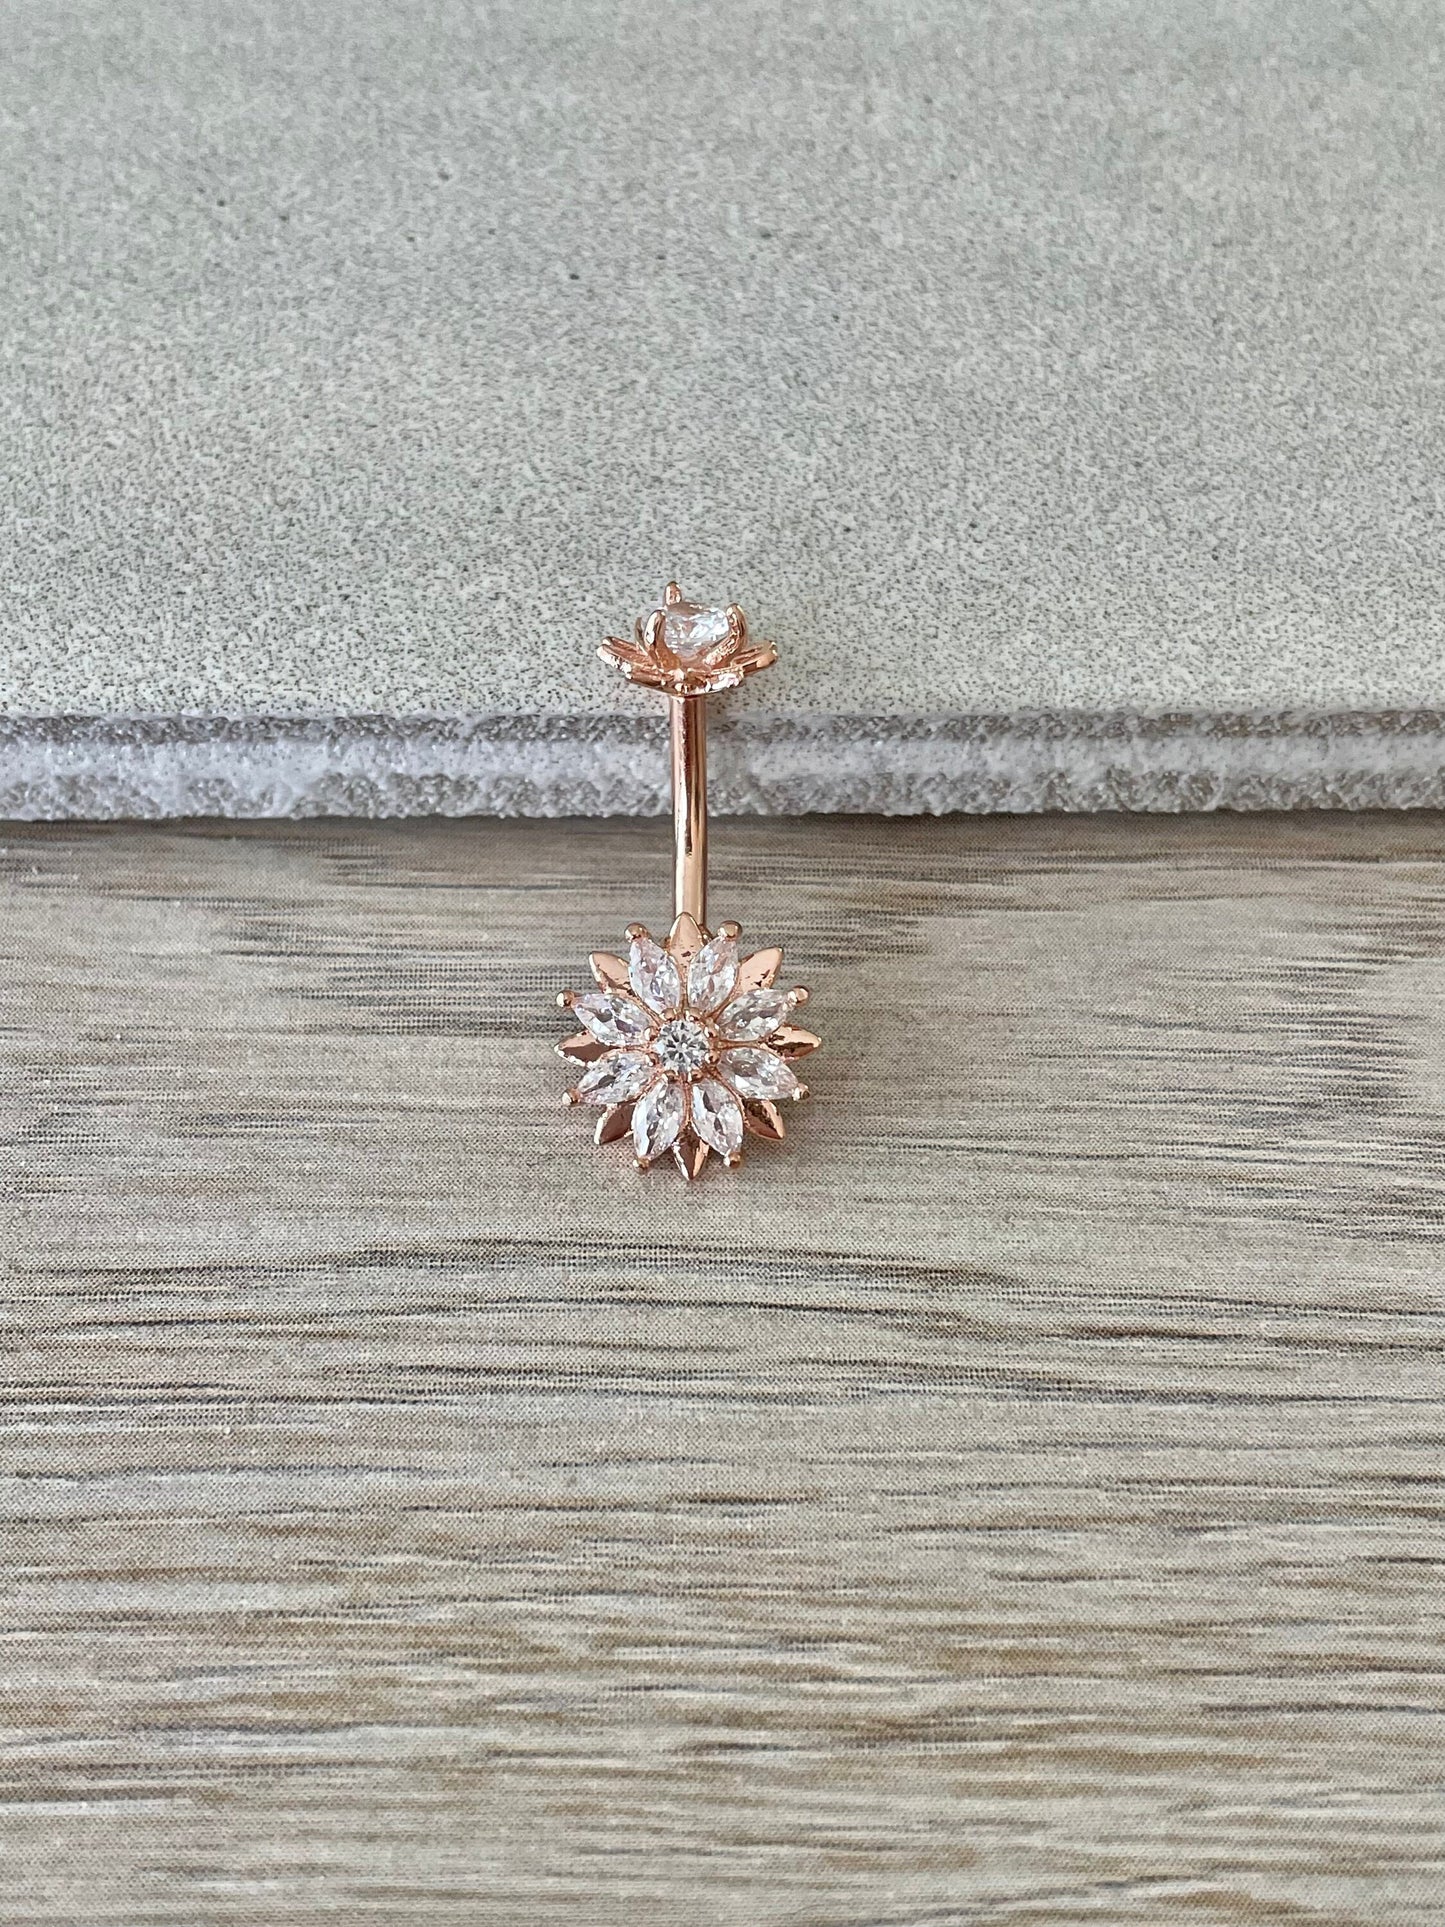 Rose Gold Flower Belly Button Ring (10mm, 14G) Internally Threaded Navel Piercing